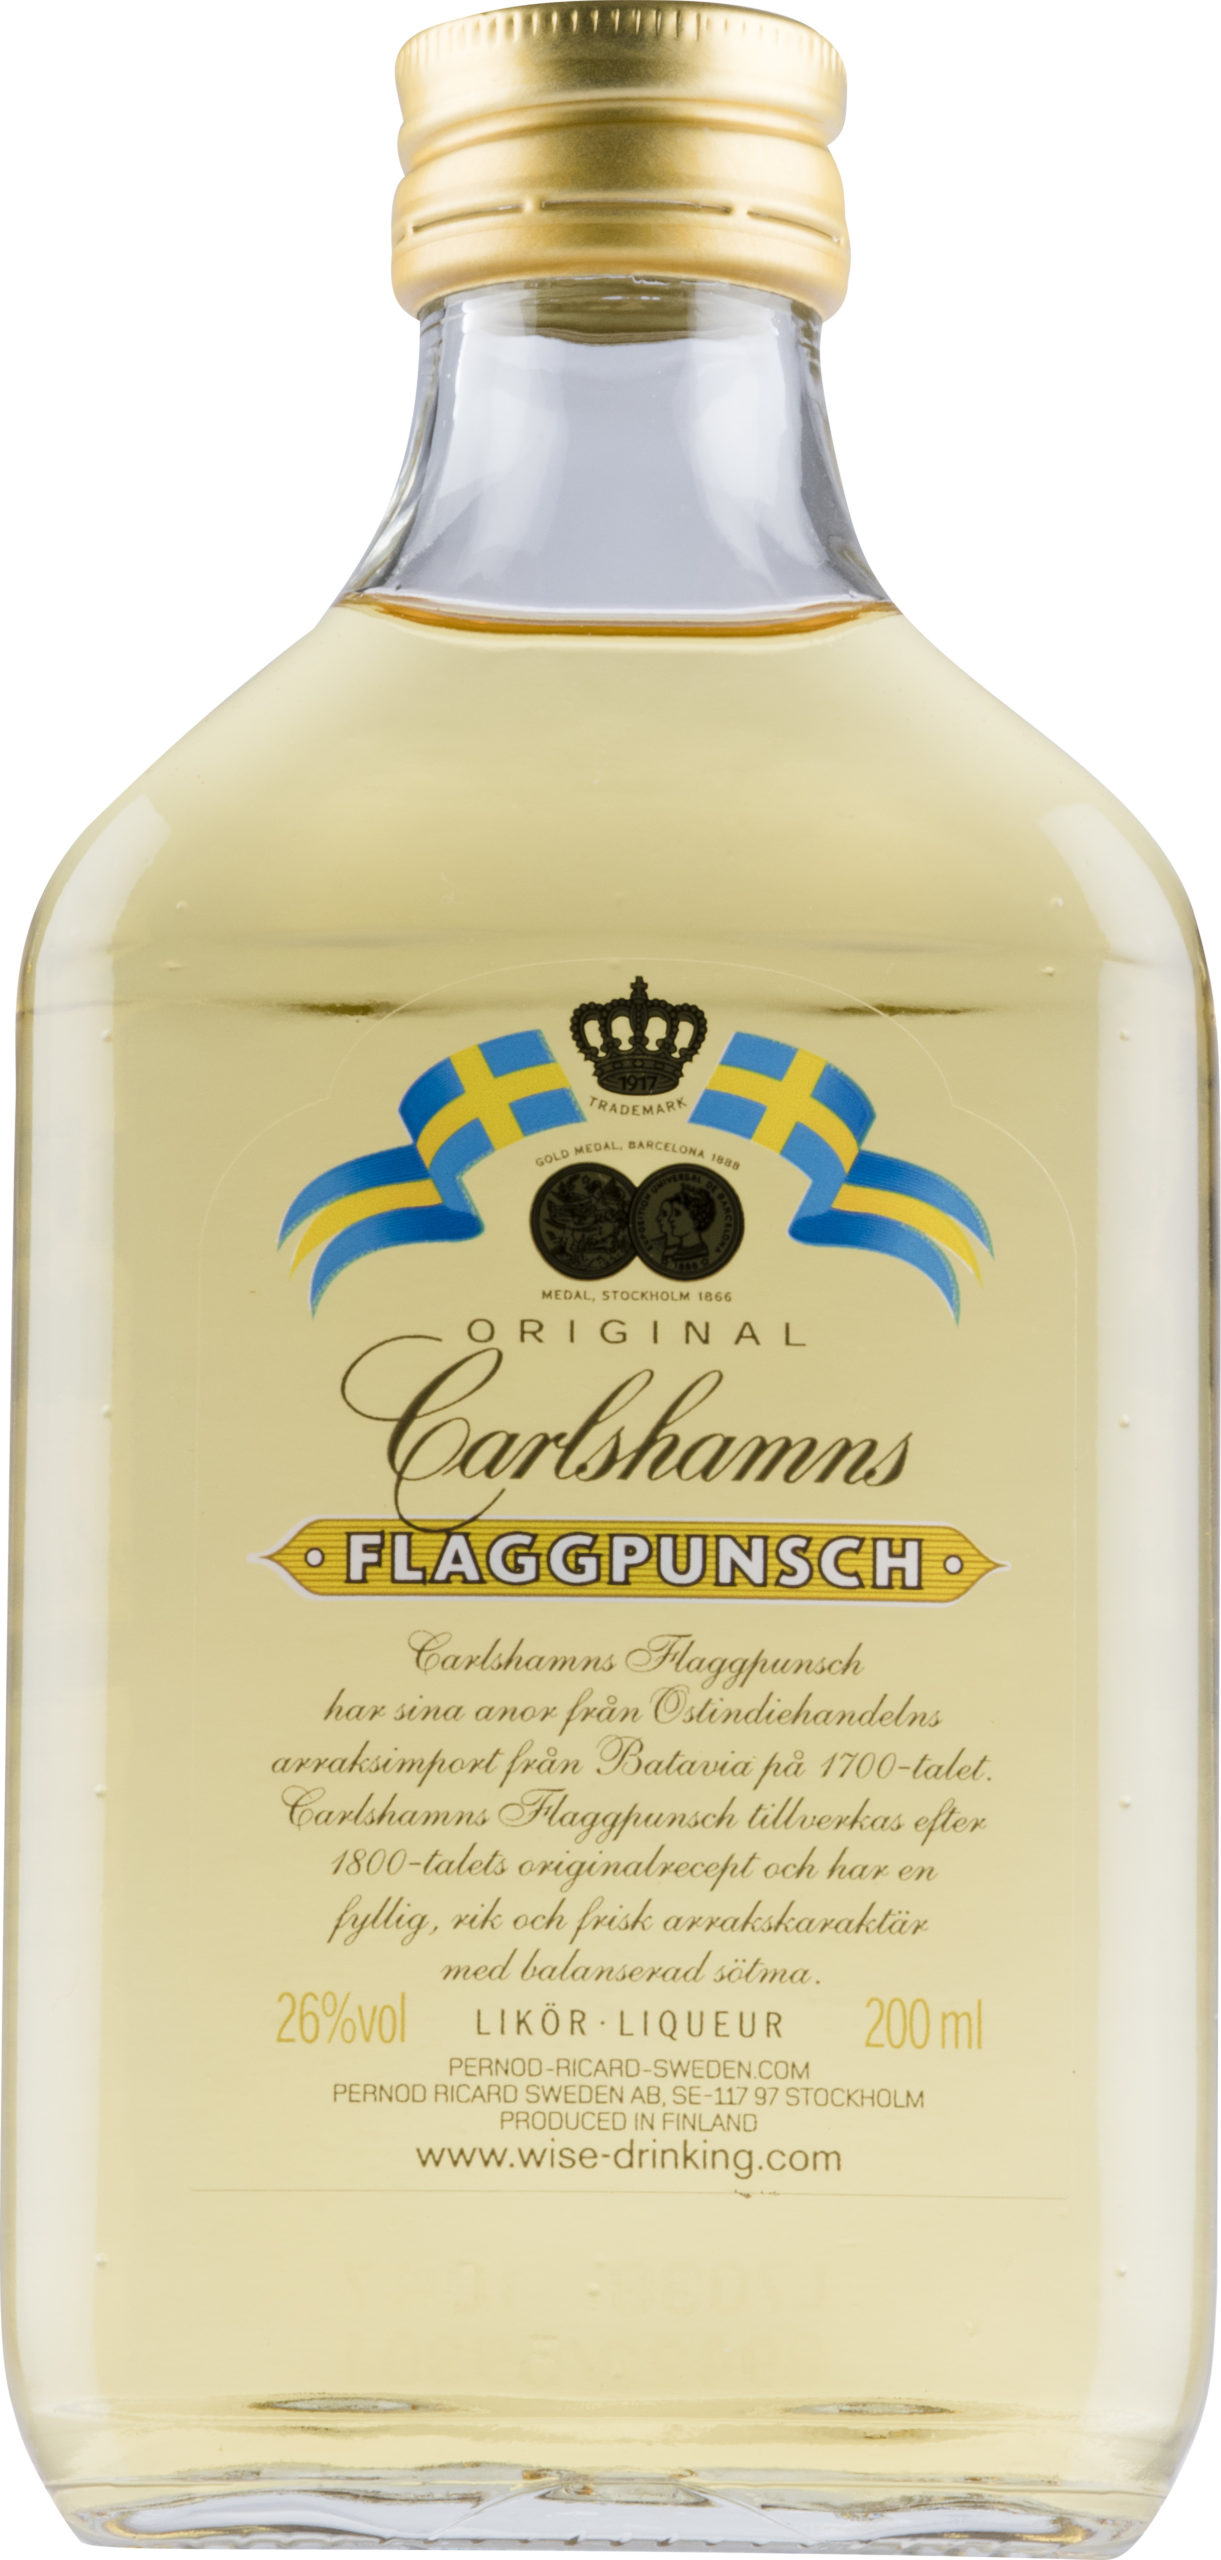 Carlshamns Flaggpunsch Original